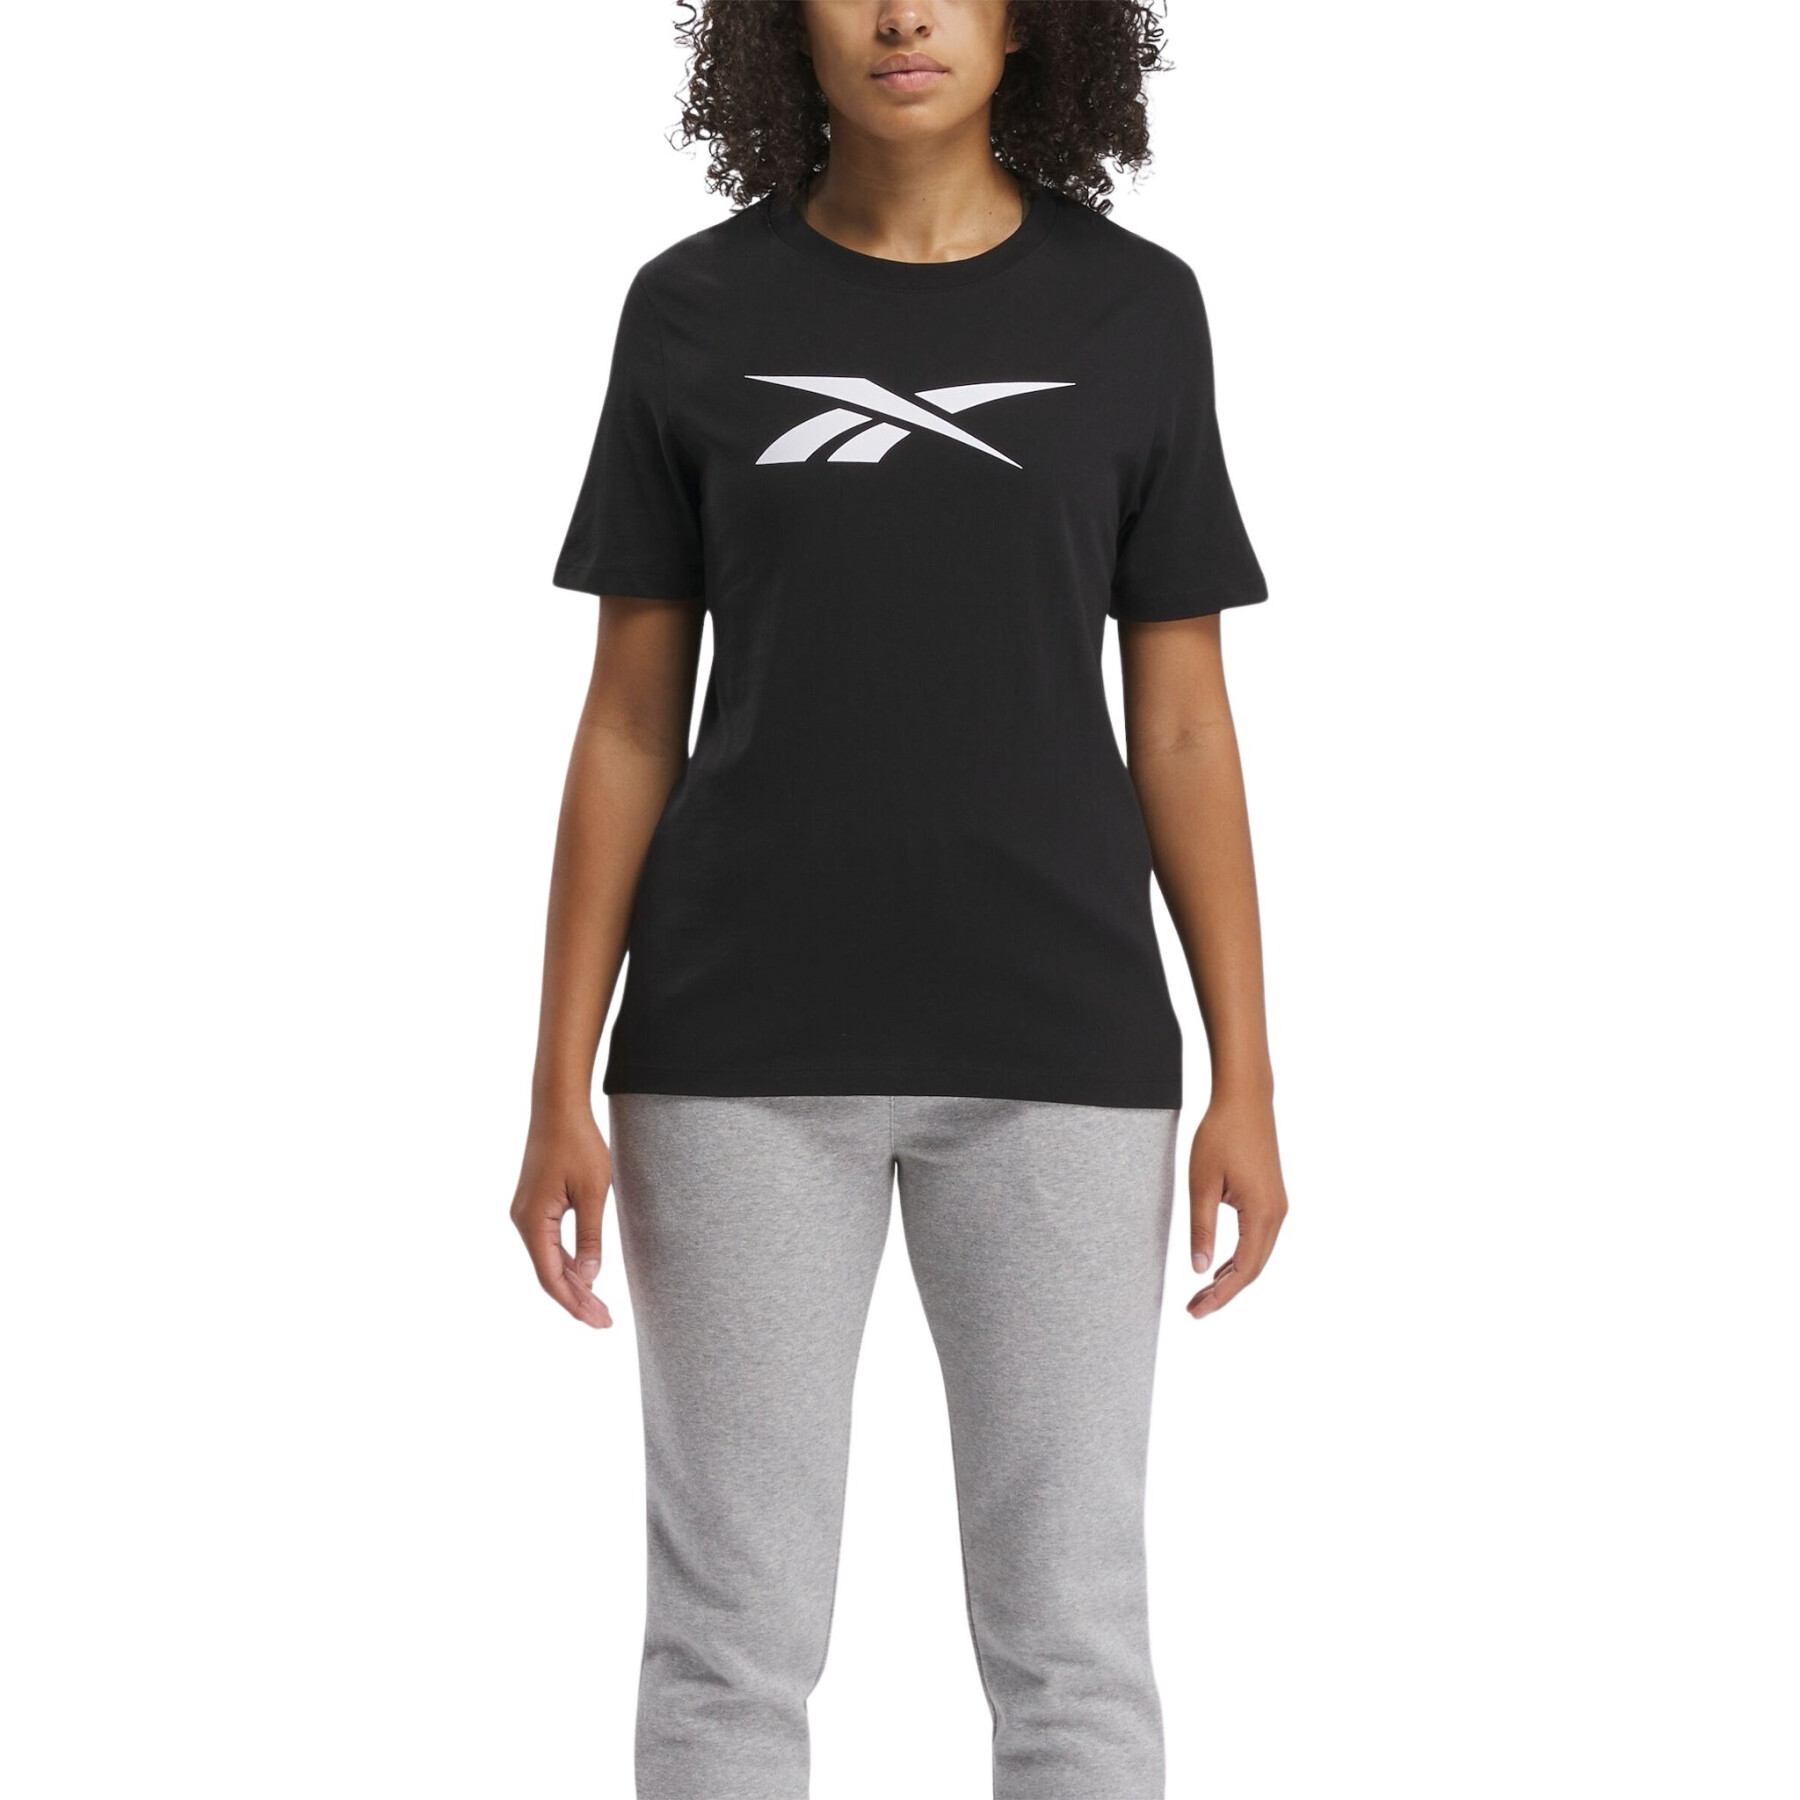 Women's T-shirt Reebok Vector Graphic